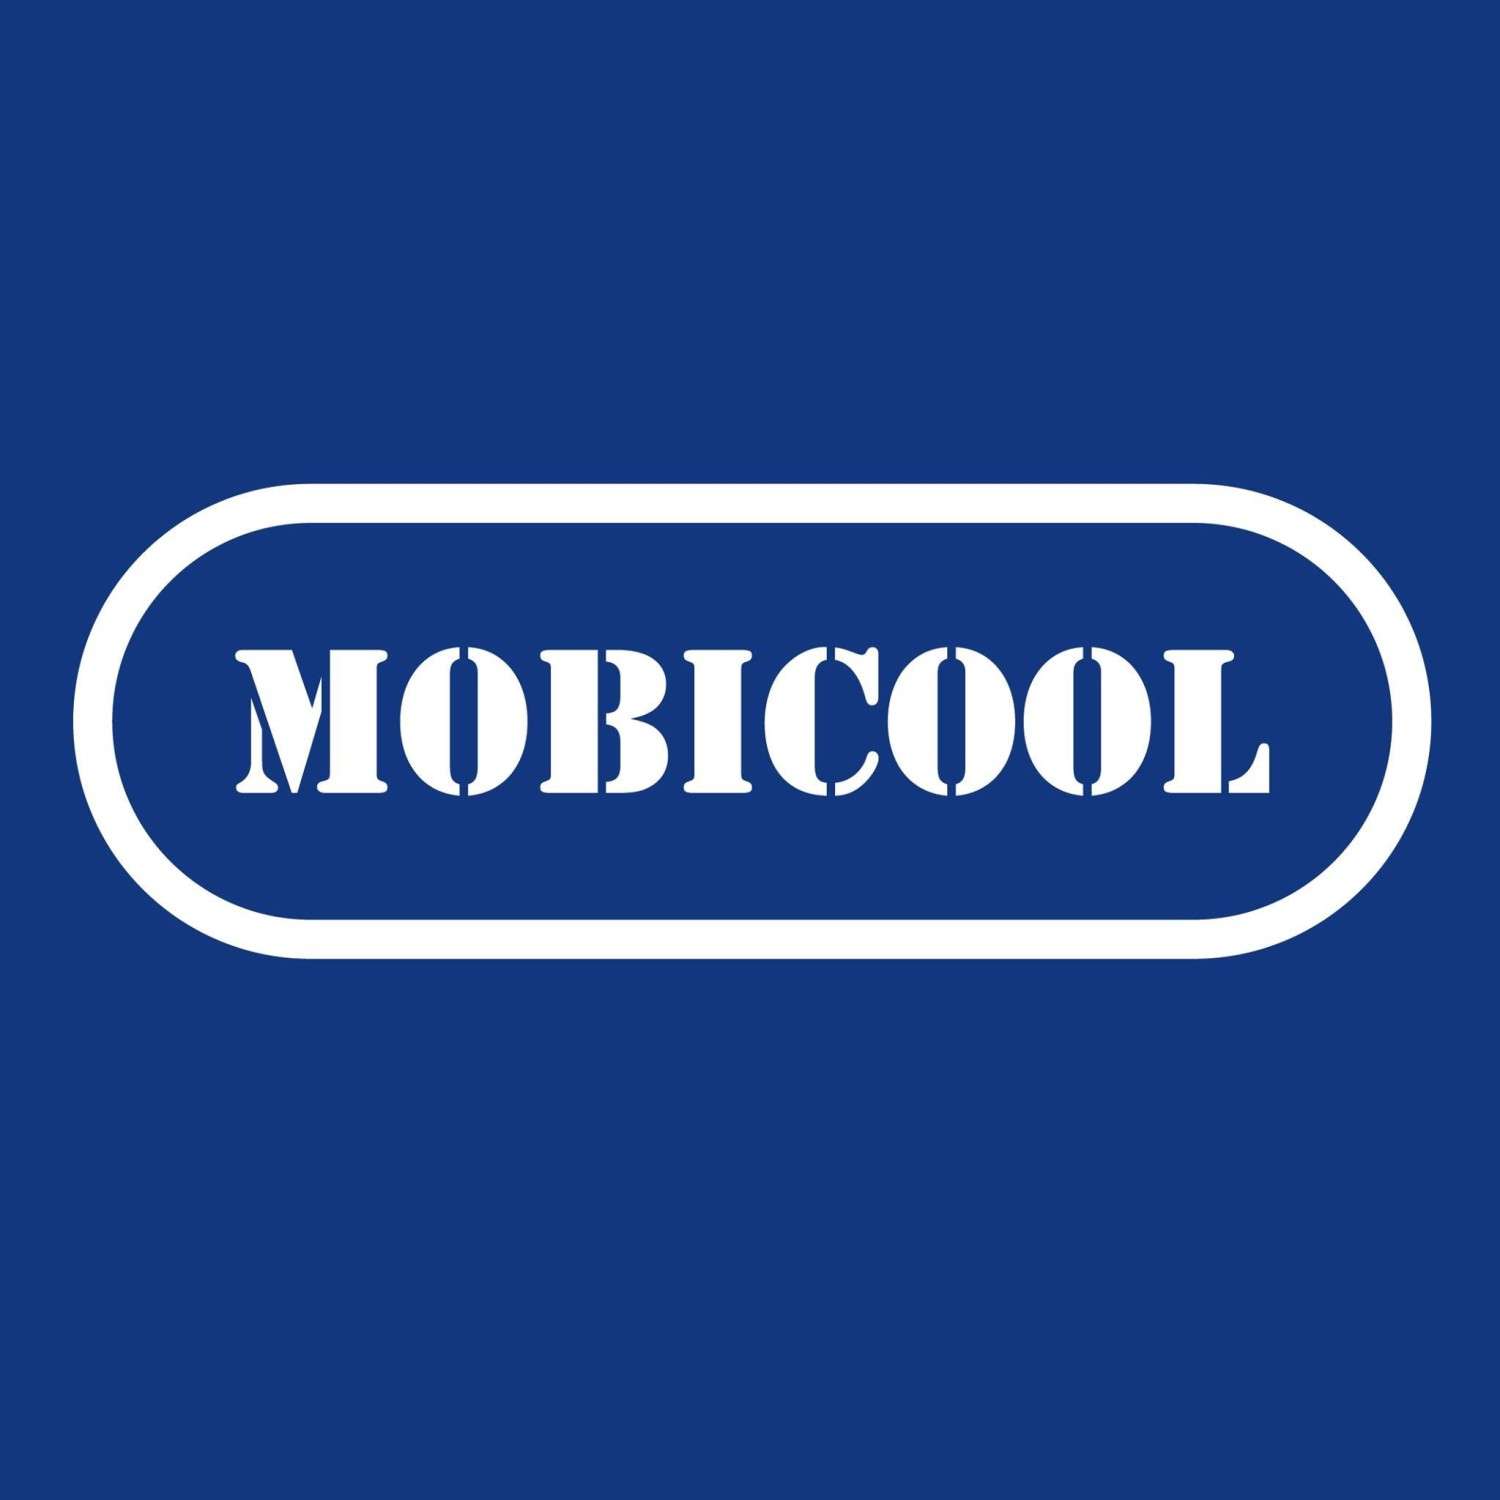 Mobicool - Crunchbase Company Profile & Funding